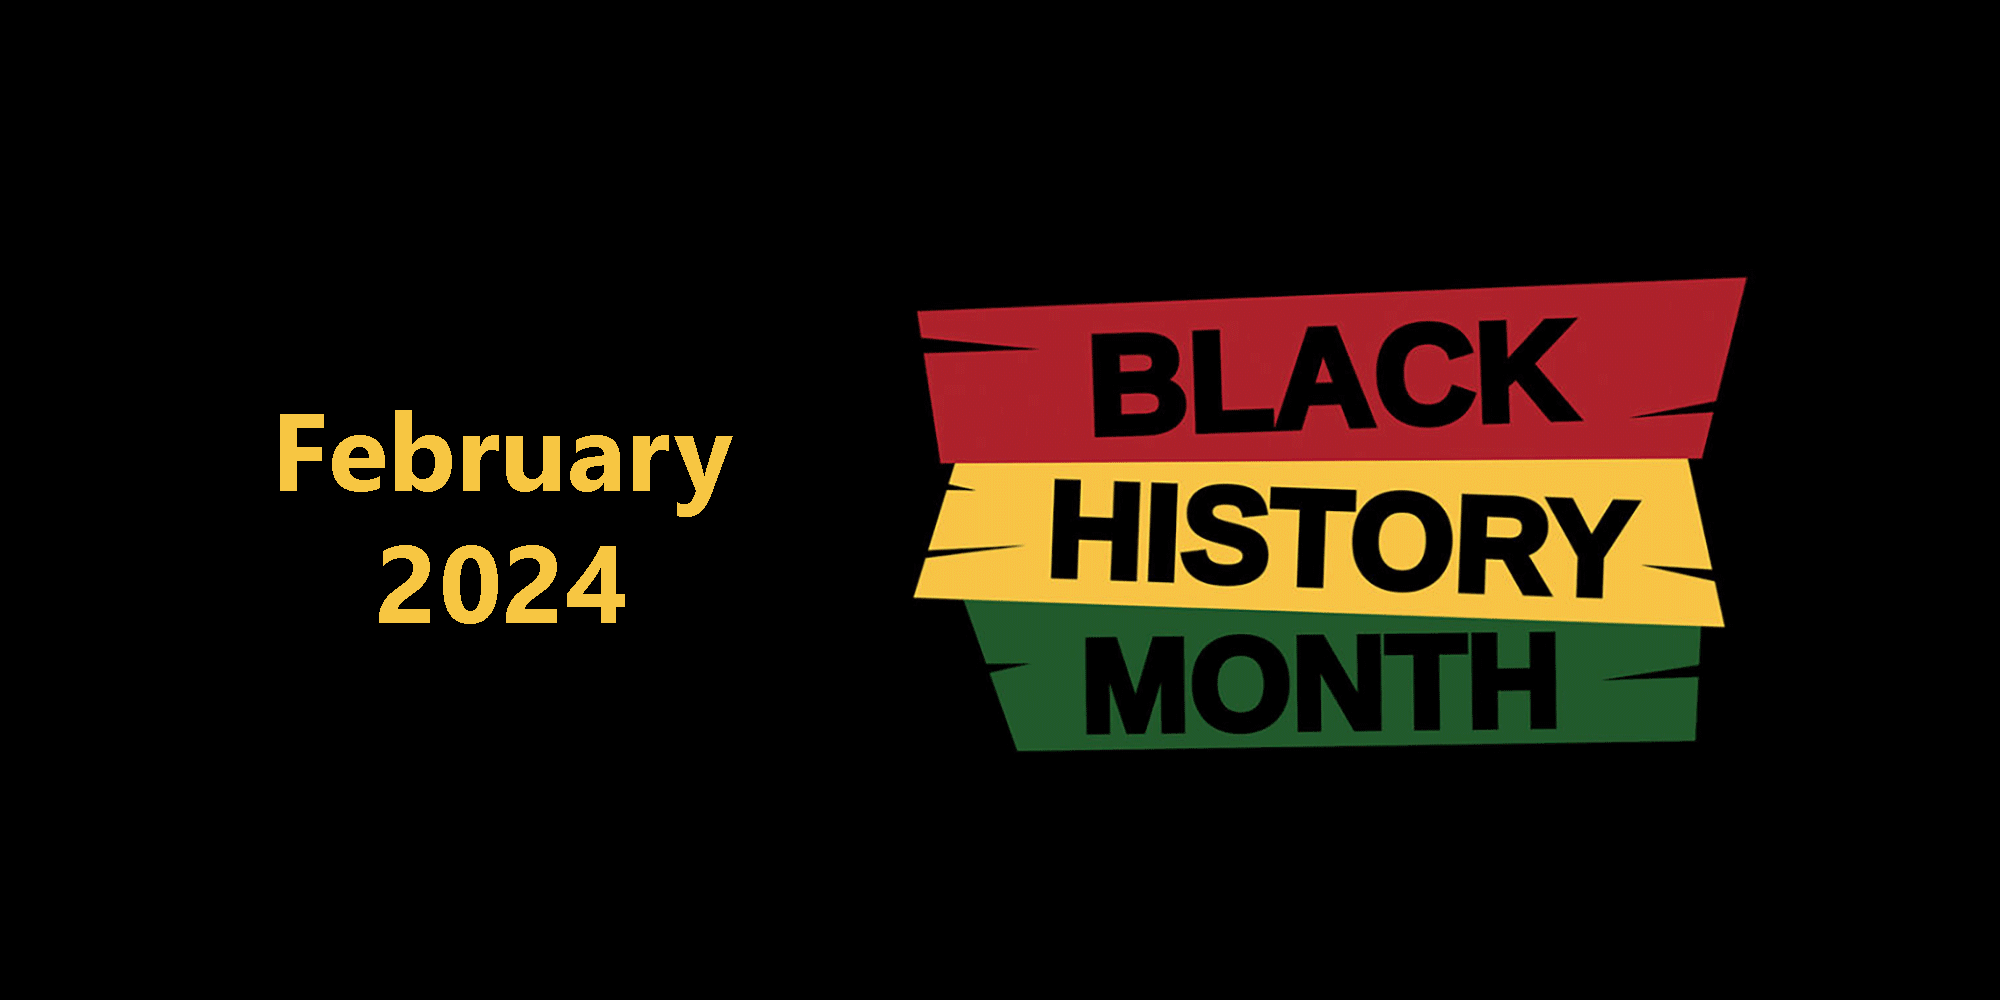 Black History Month - February 2023